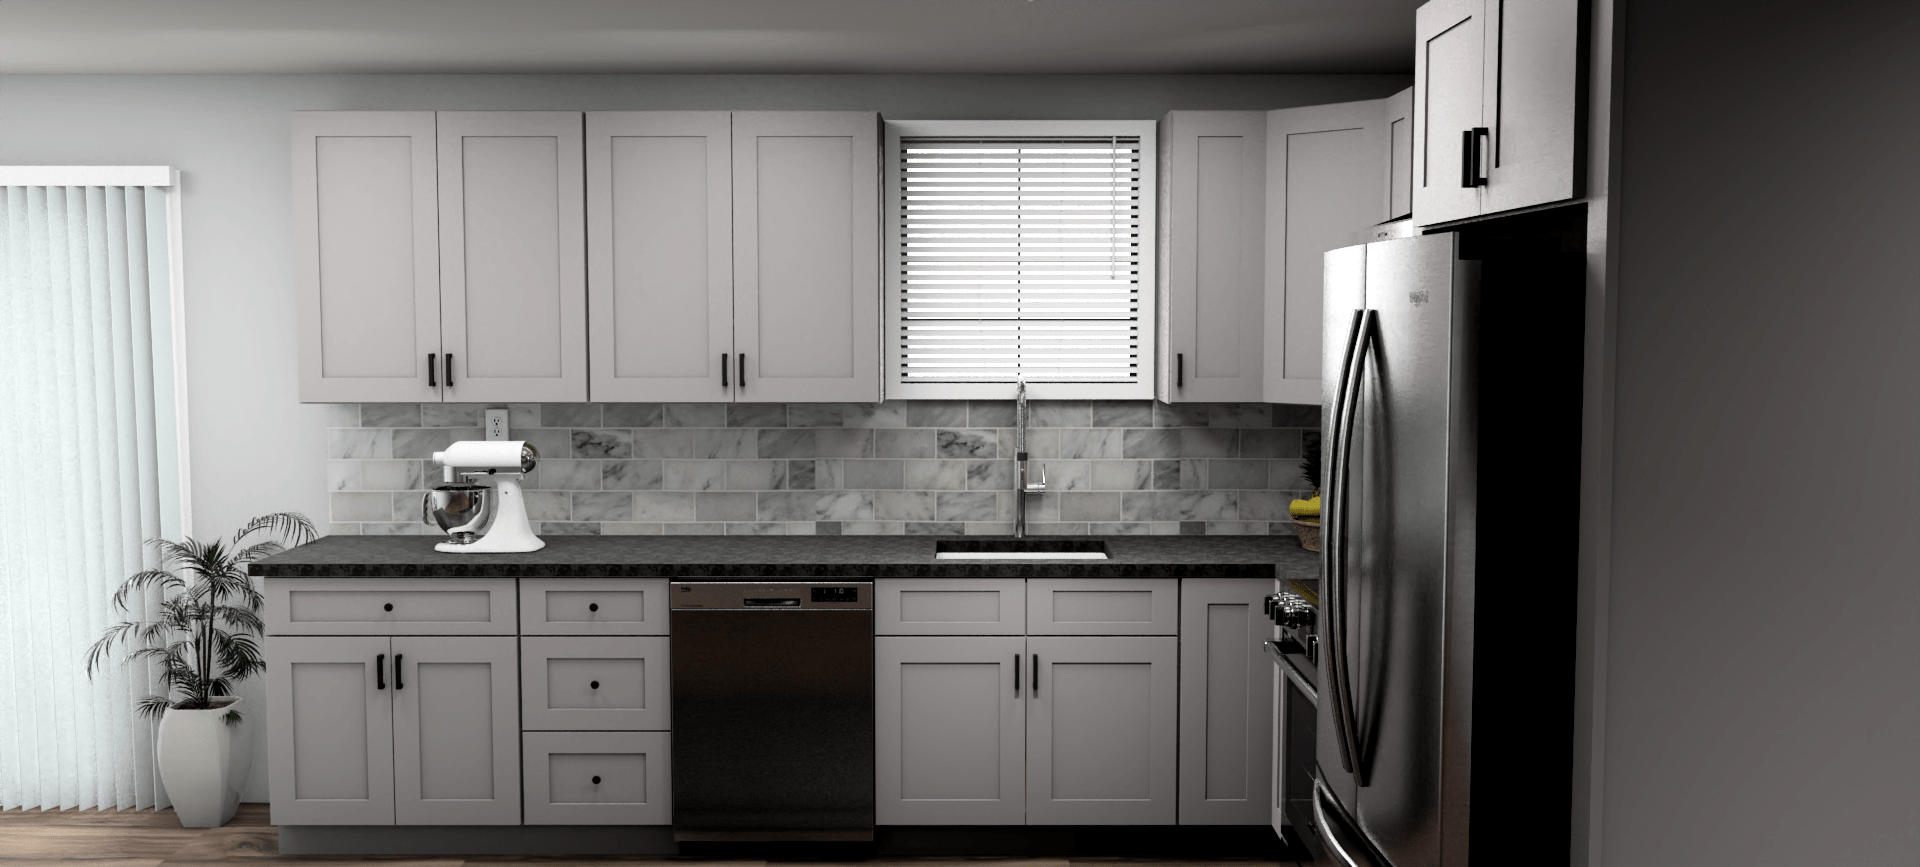 Fabuwood Allure Galaxy Nickel 12 x 10 L Shaped Kitchen Side Layout Photo